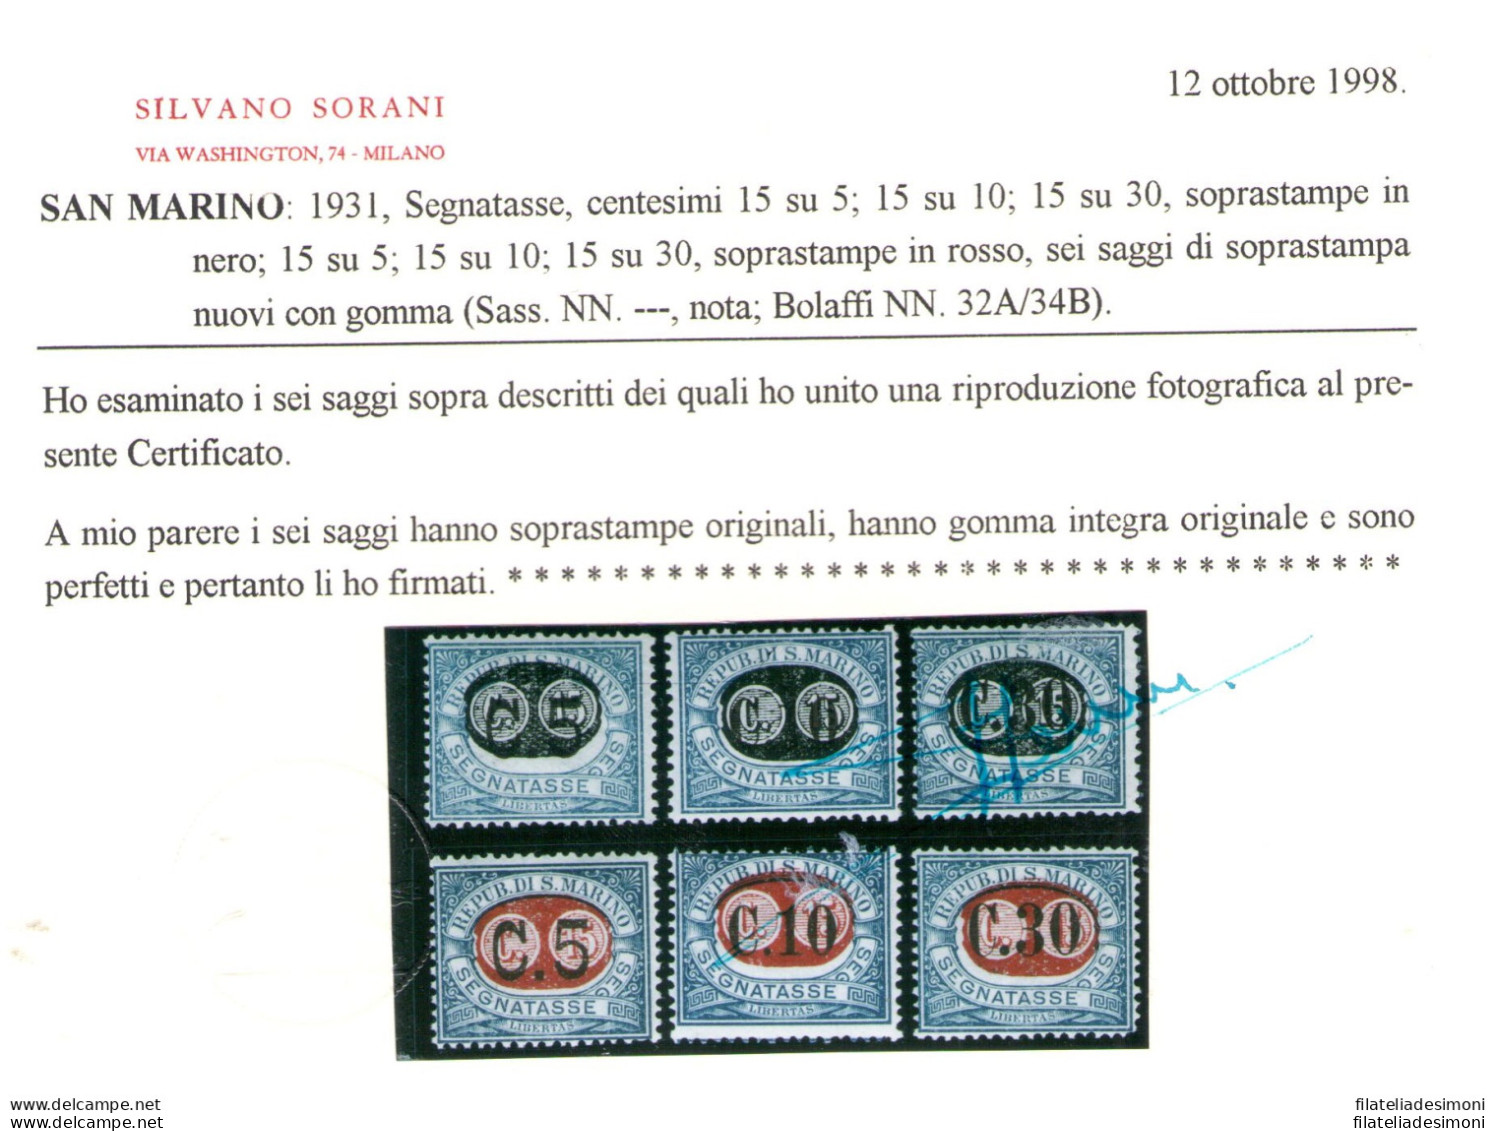 1931 SAN MARINO, Segnatasse - Saggi - Soprastampa Nera e Rossa - n. 32A/34B - Rari - Certificati Bolaffi - Raybaudi oro